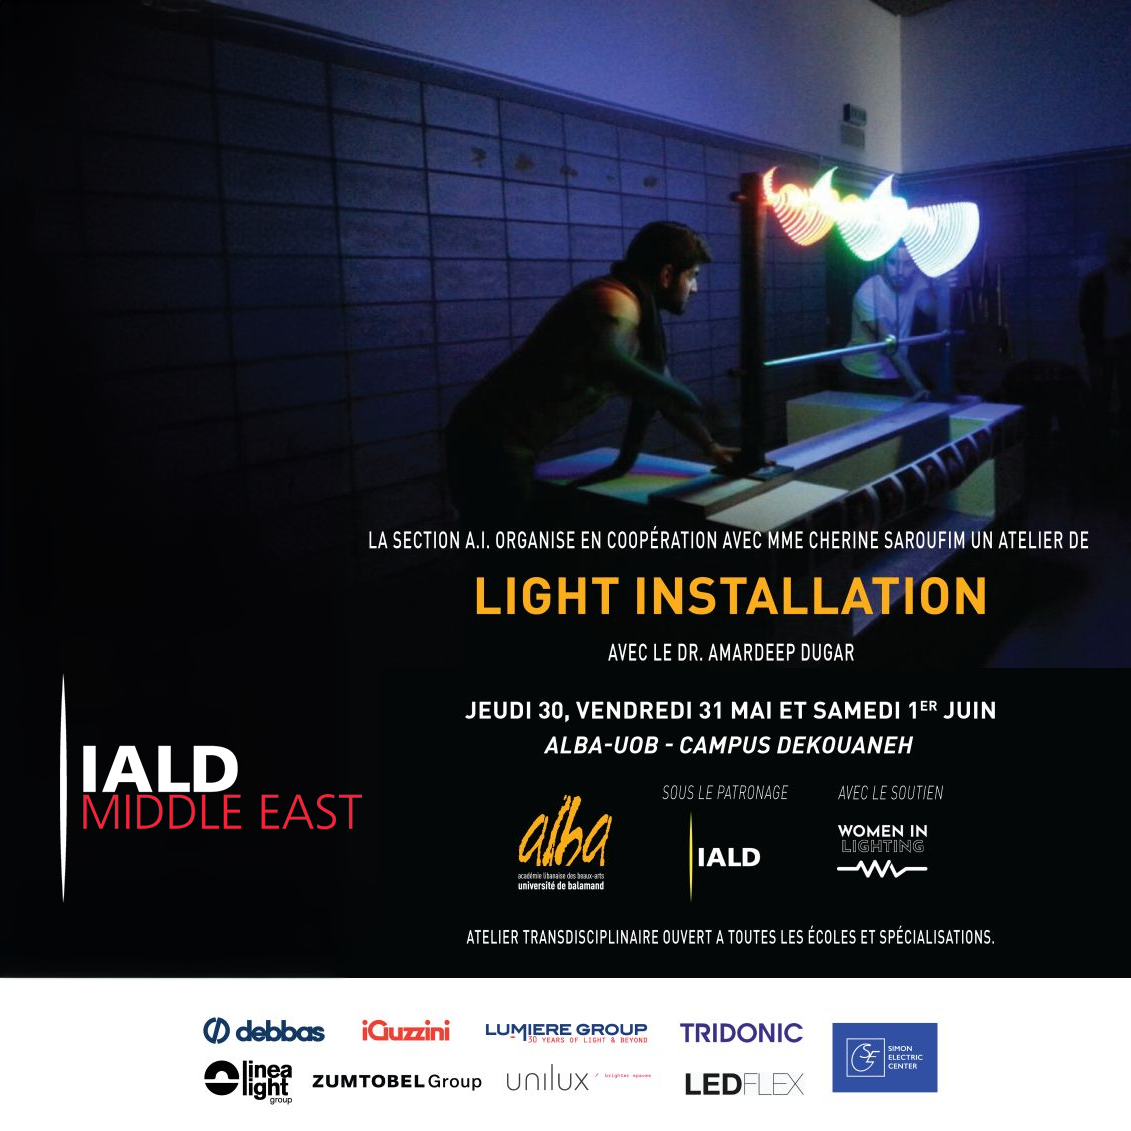 IALD Middle East: "Light Installation" Workshop